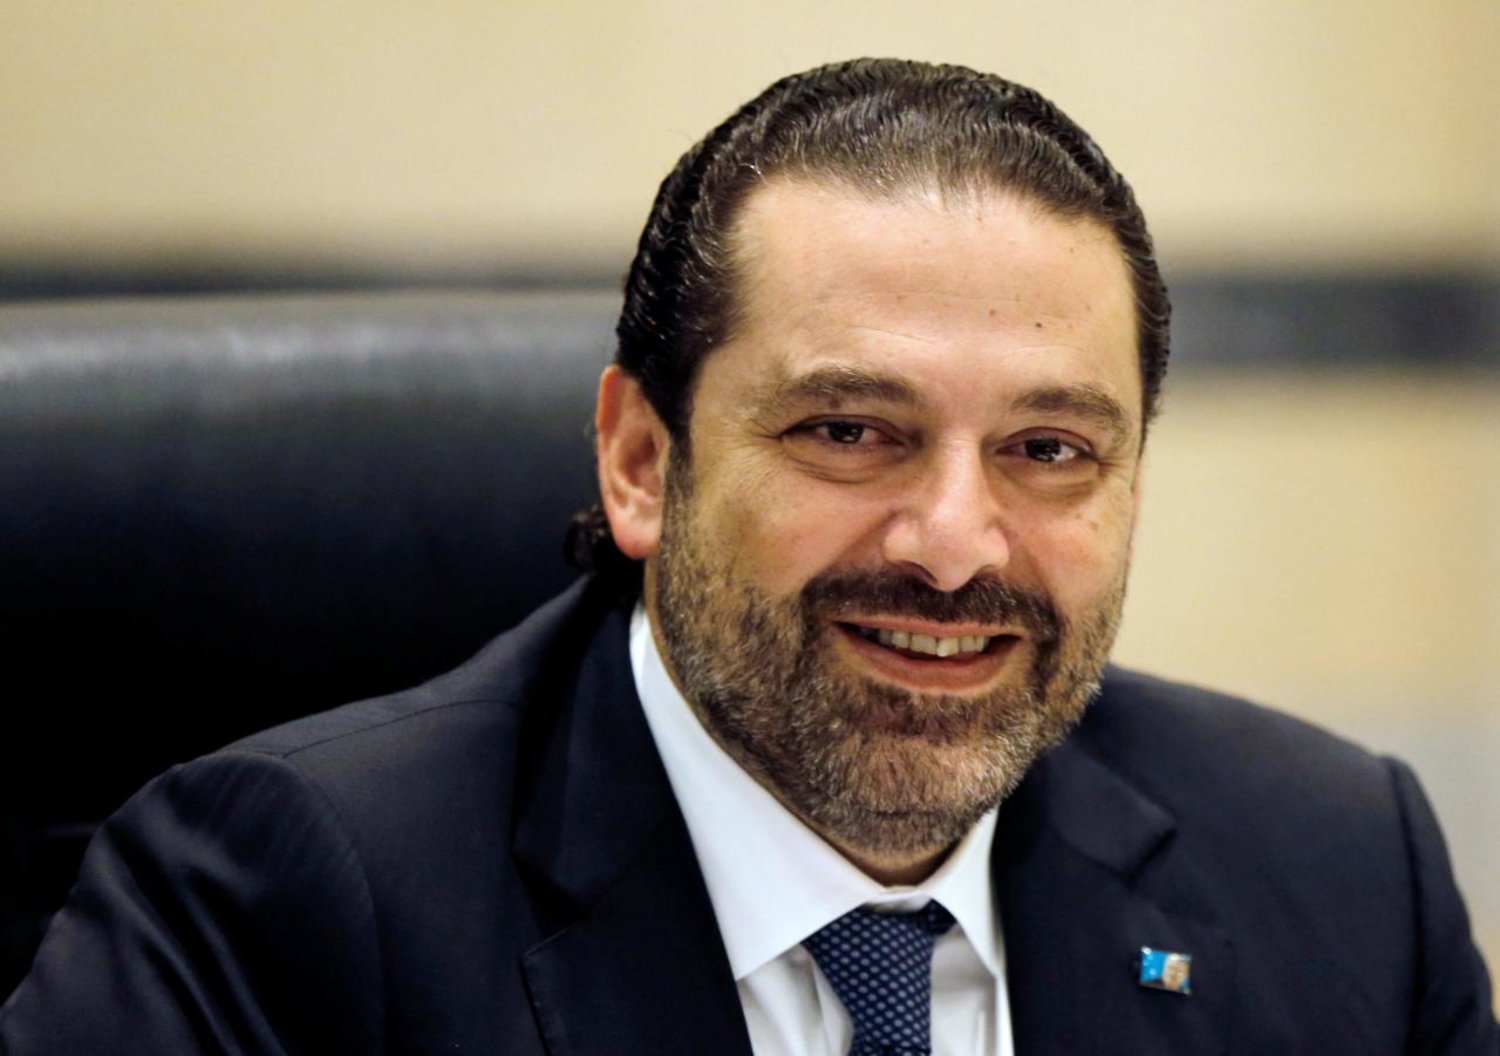 Lebanon's Prime Minister Saad al-Hariri presides a cabinet meeting at the governmental palace in Beirut, Lebanon September 29, 2017. REUTERS/Mohamed Azakir/File Photo